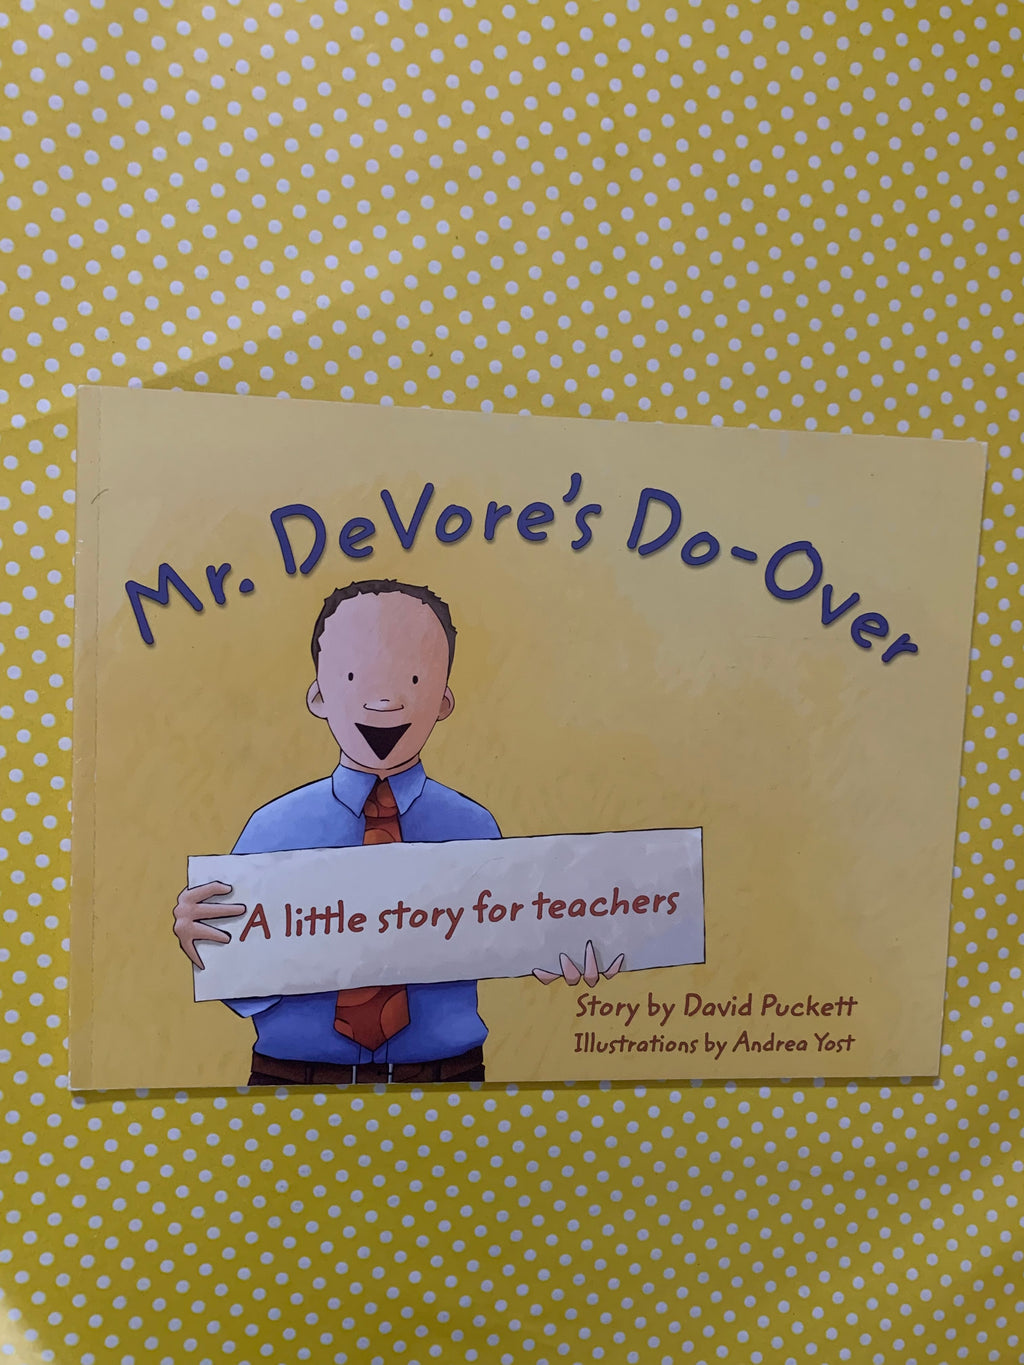 Mr. DeVore's Do-Over- By David Puckett